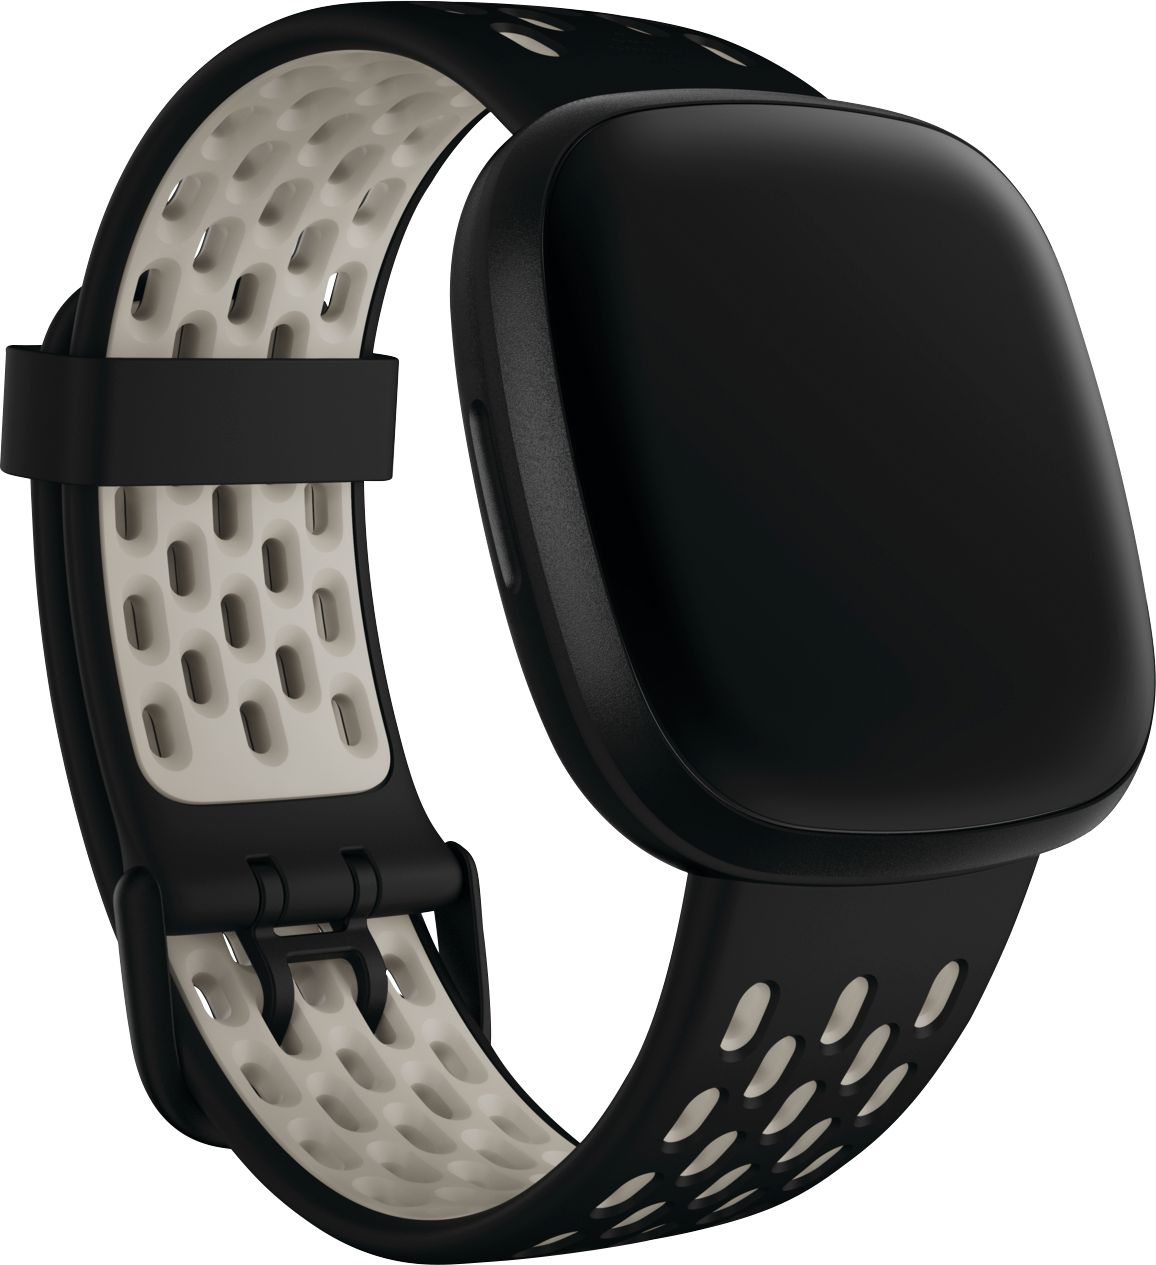 Fitbit Sense 2 Breathable Strap (White)